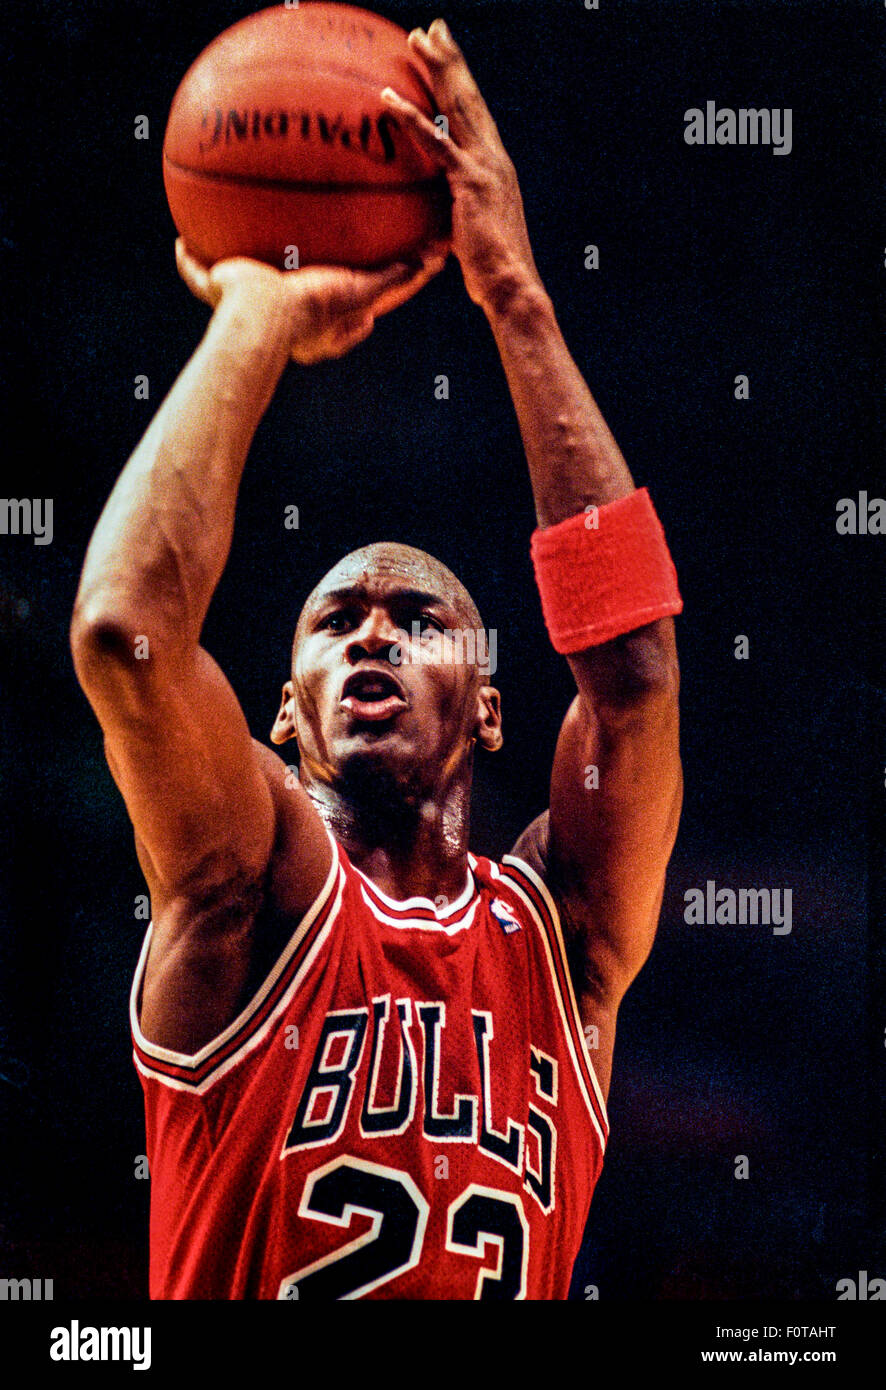 Michael Jordan competing for the NBA Chicago Bulls Stock Photo - Alamy